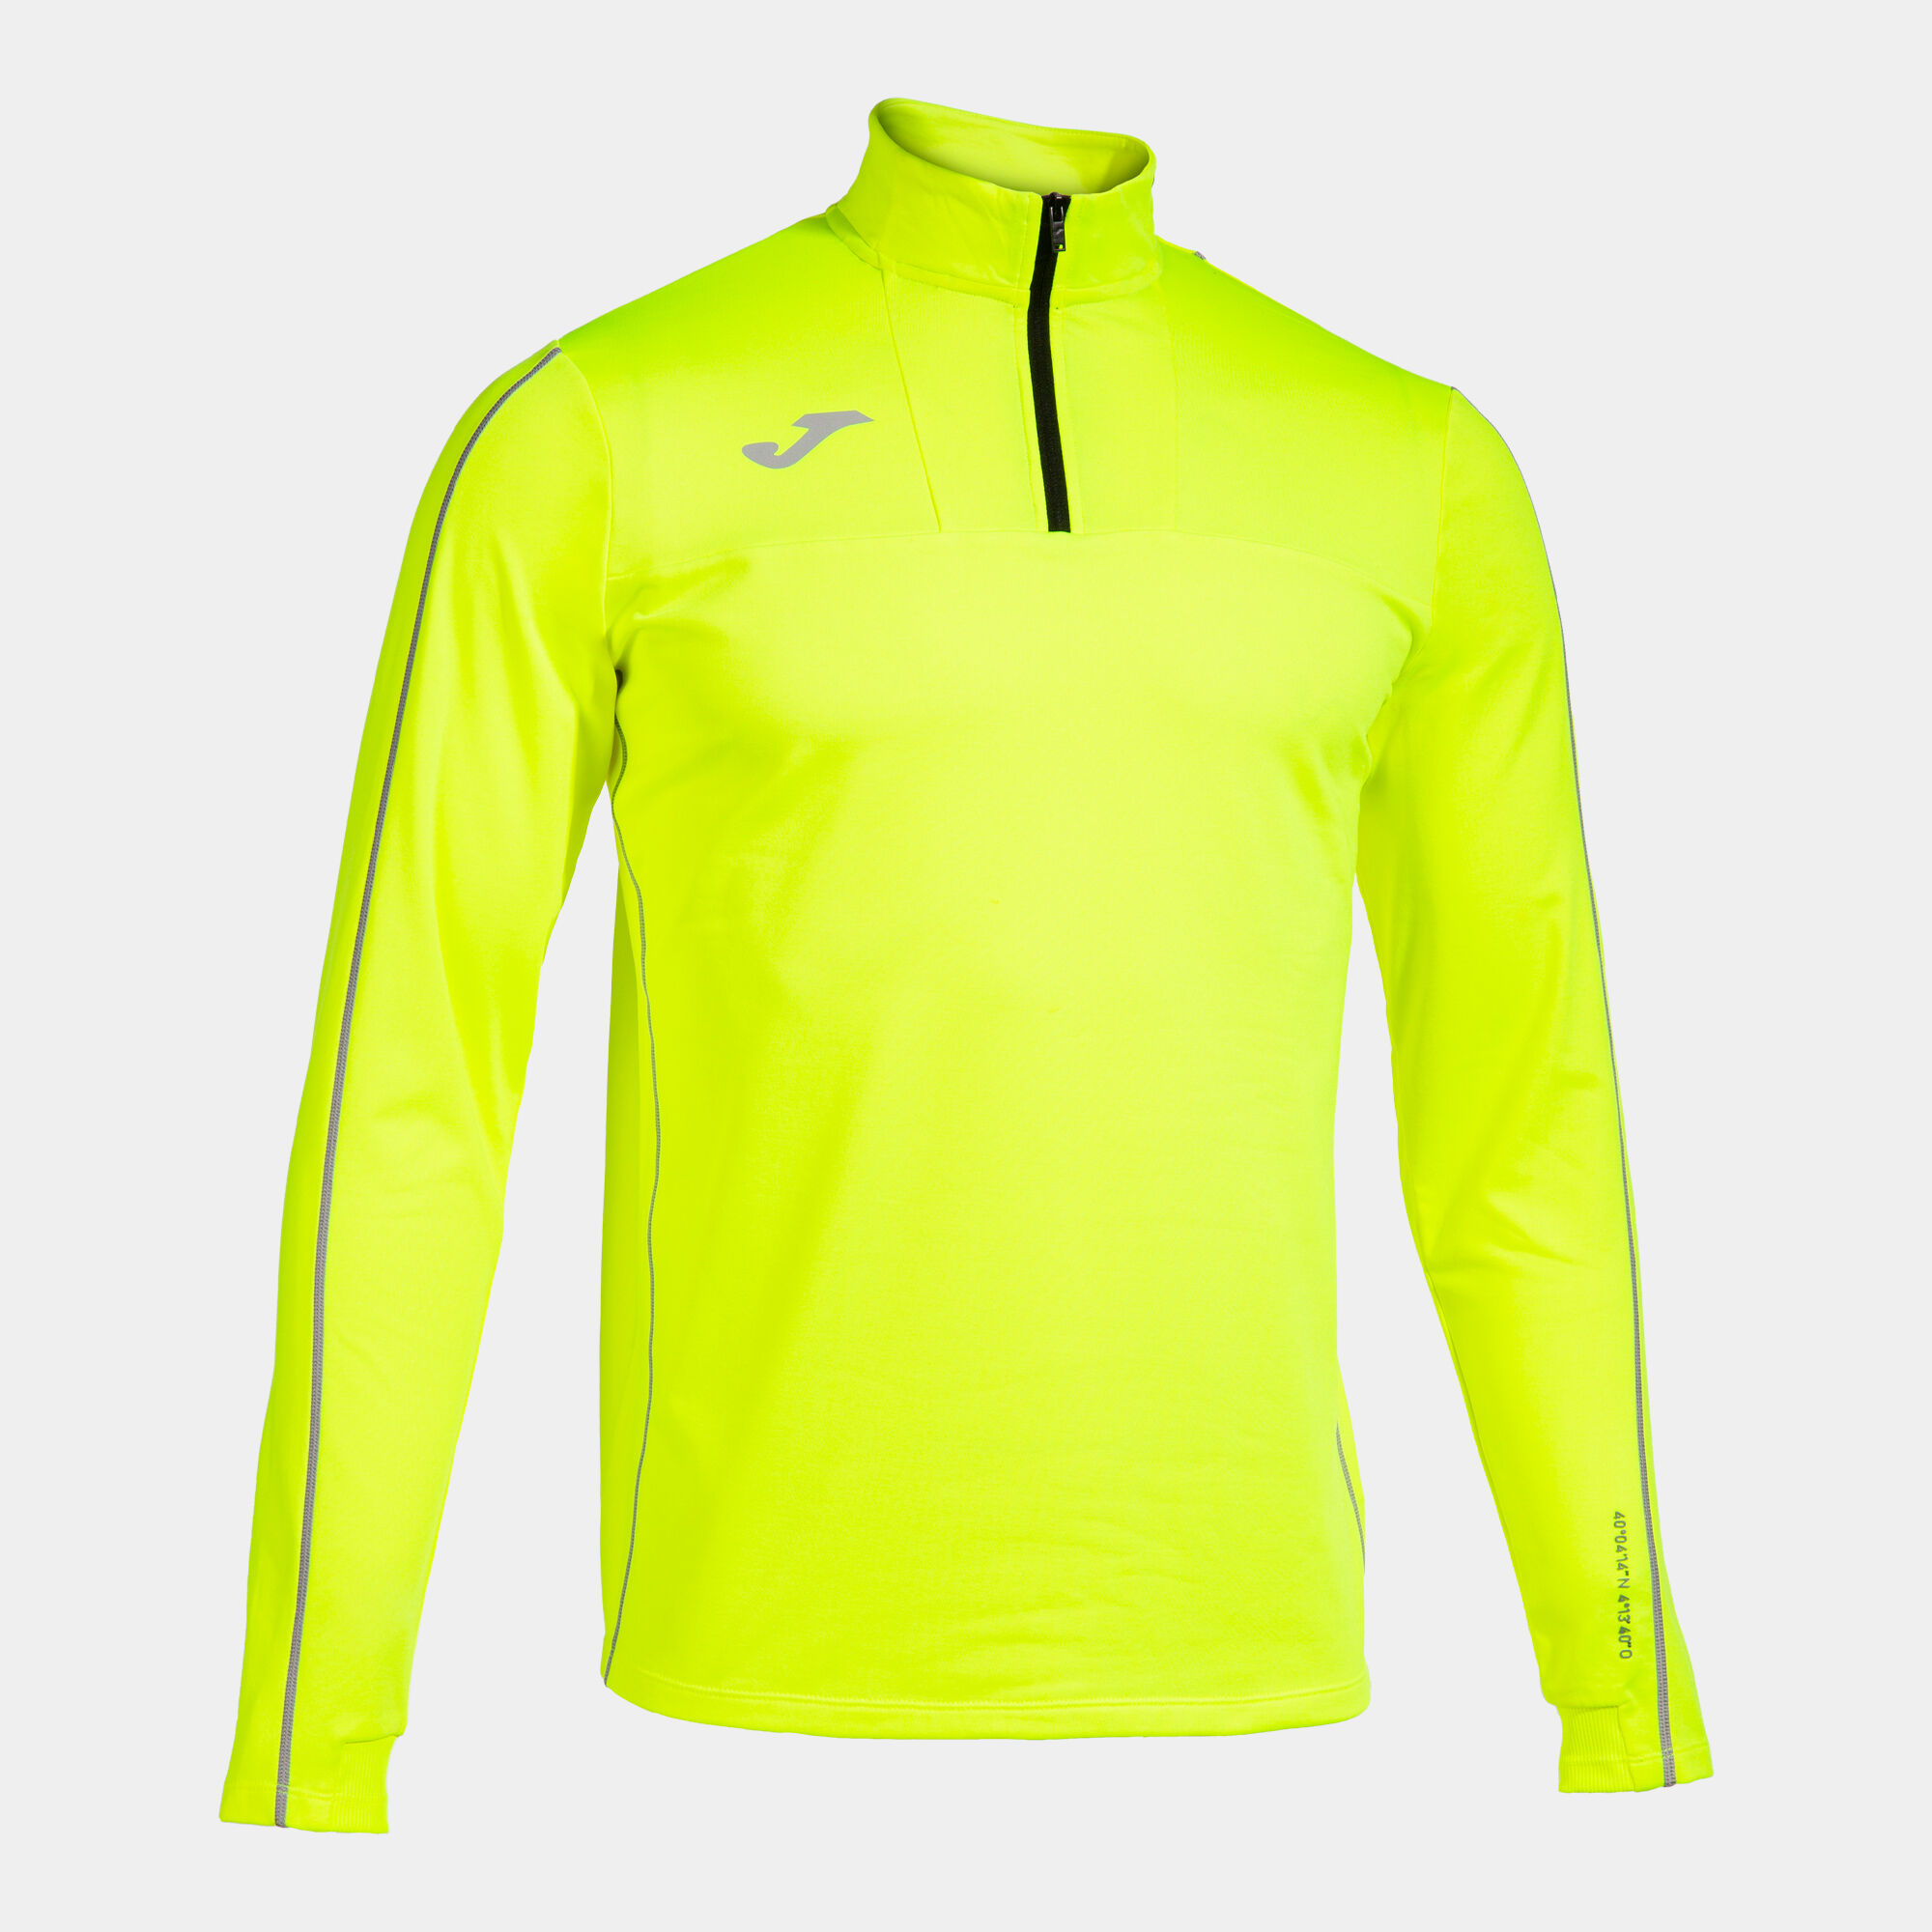 Sweat-shirt homme R-Trail Nature jaune fluo